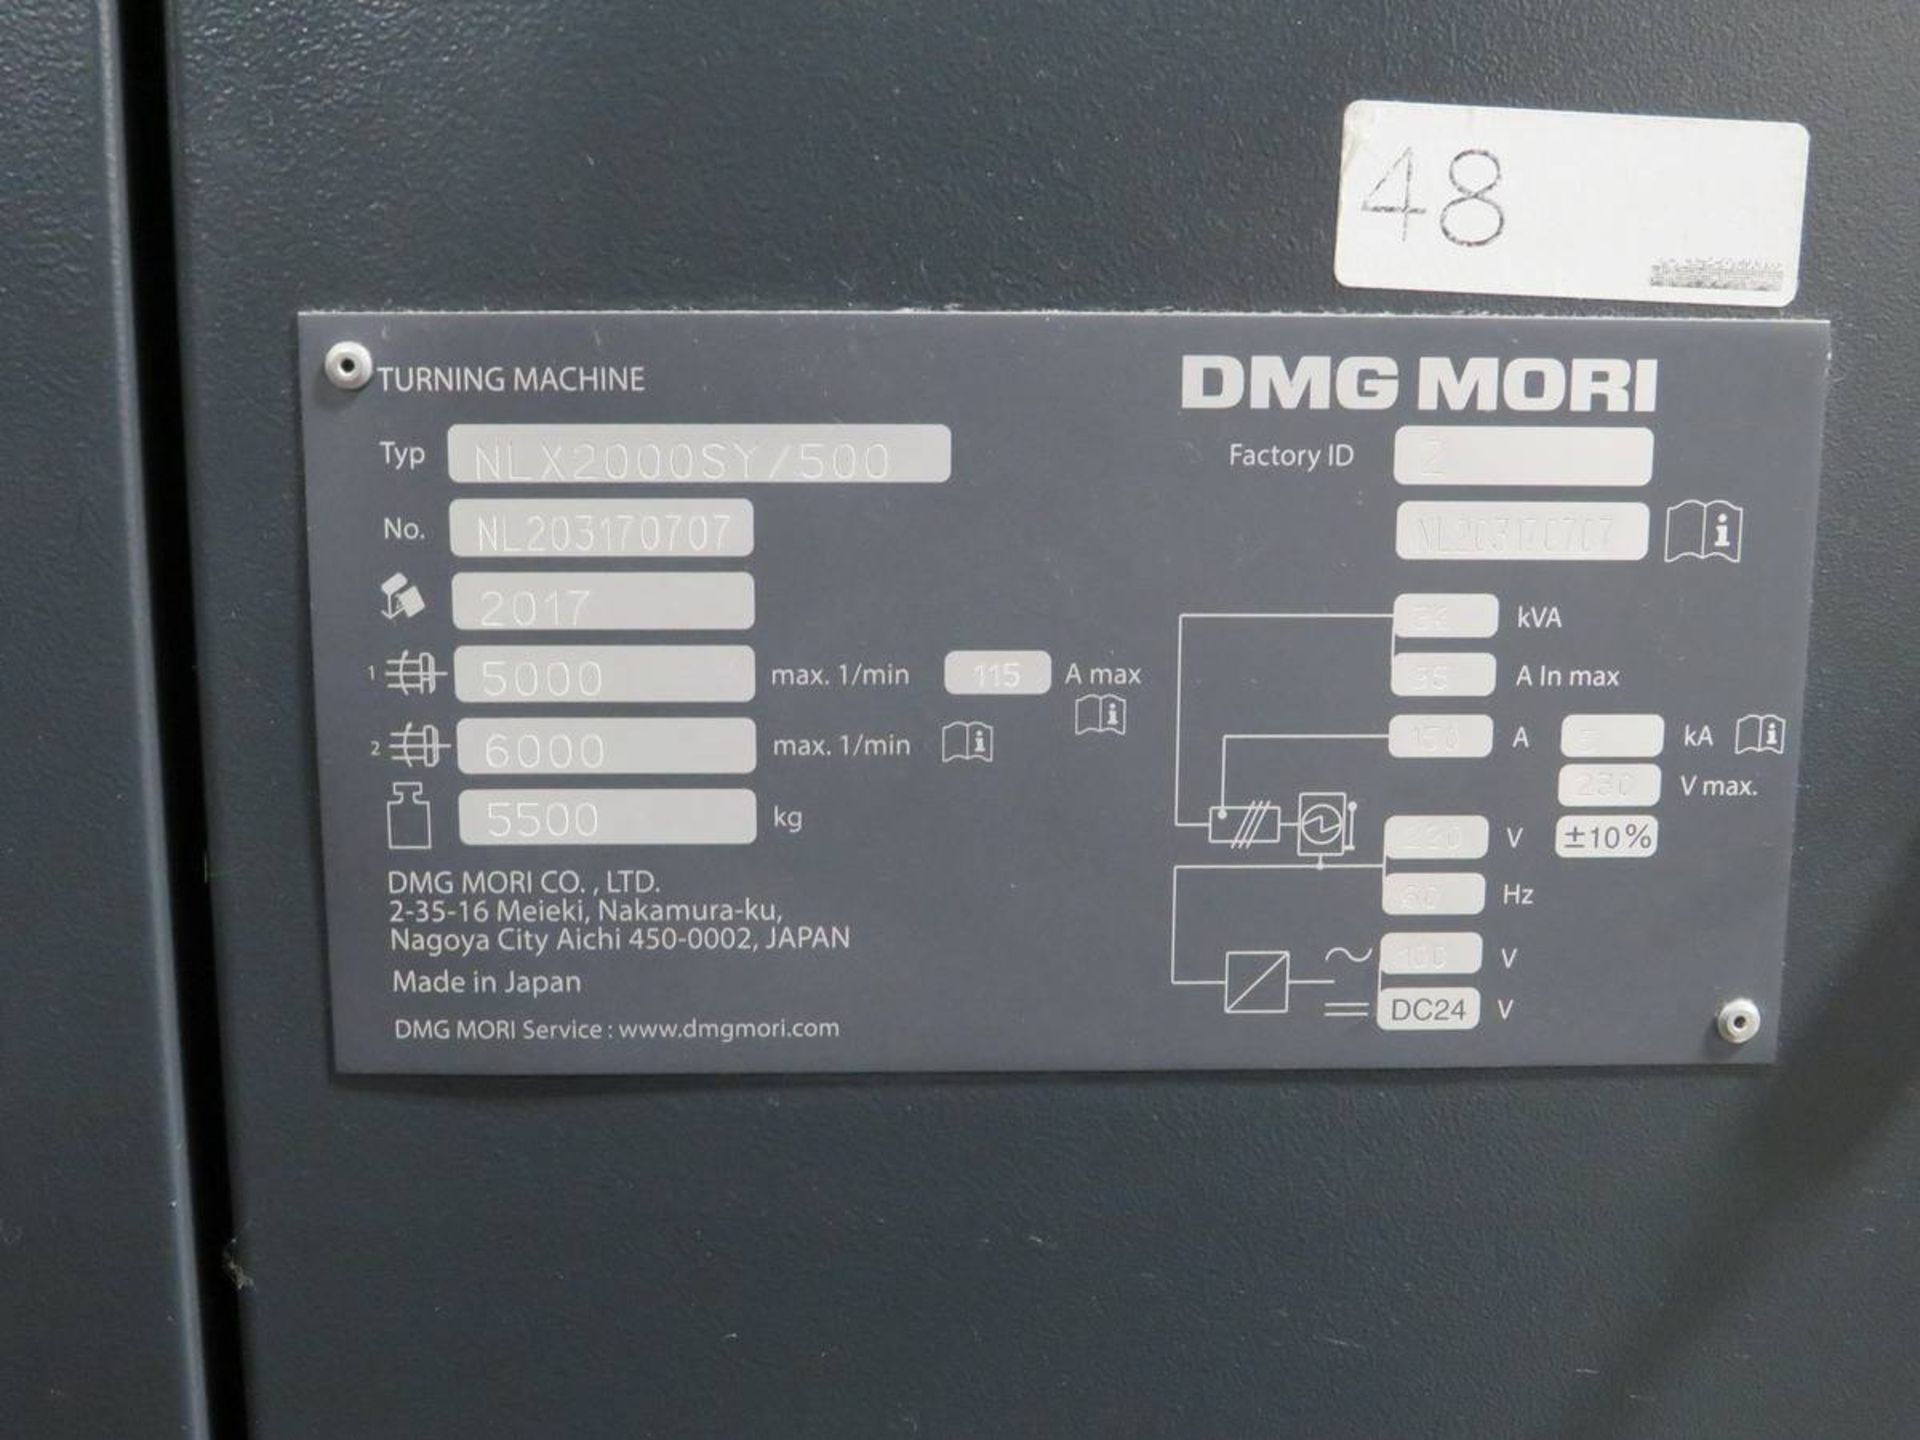 2017 DMG Mori NLX2000SY/500 CNC Turning Center - Image 9 of 10